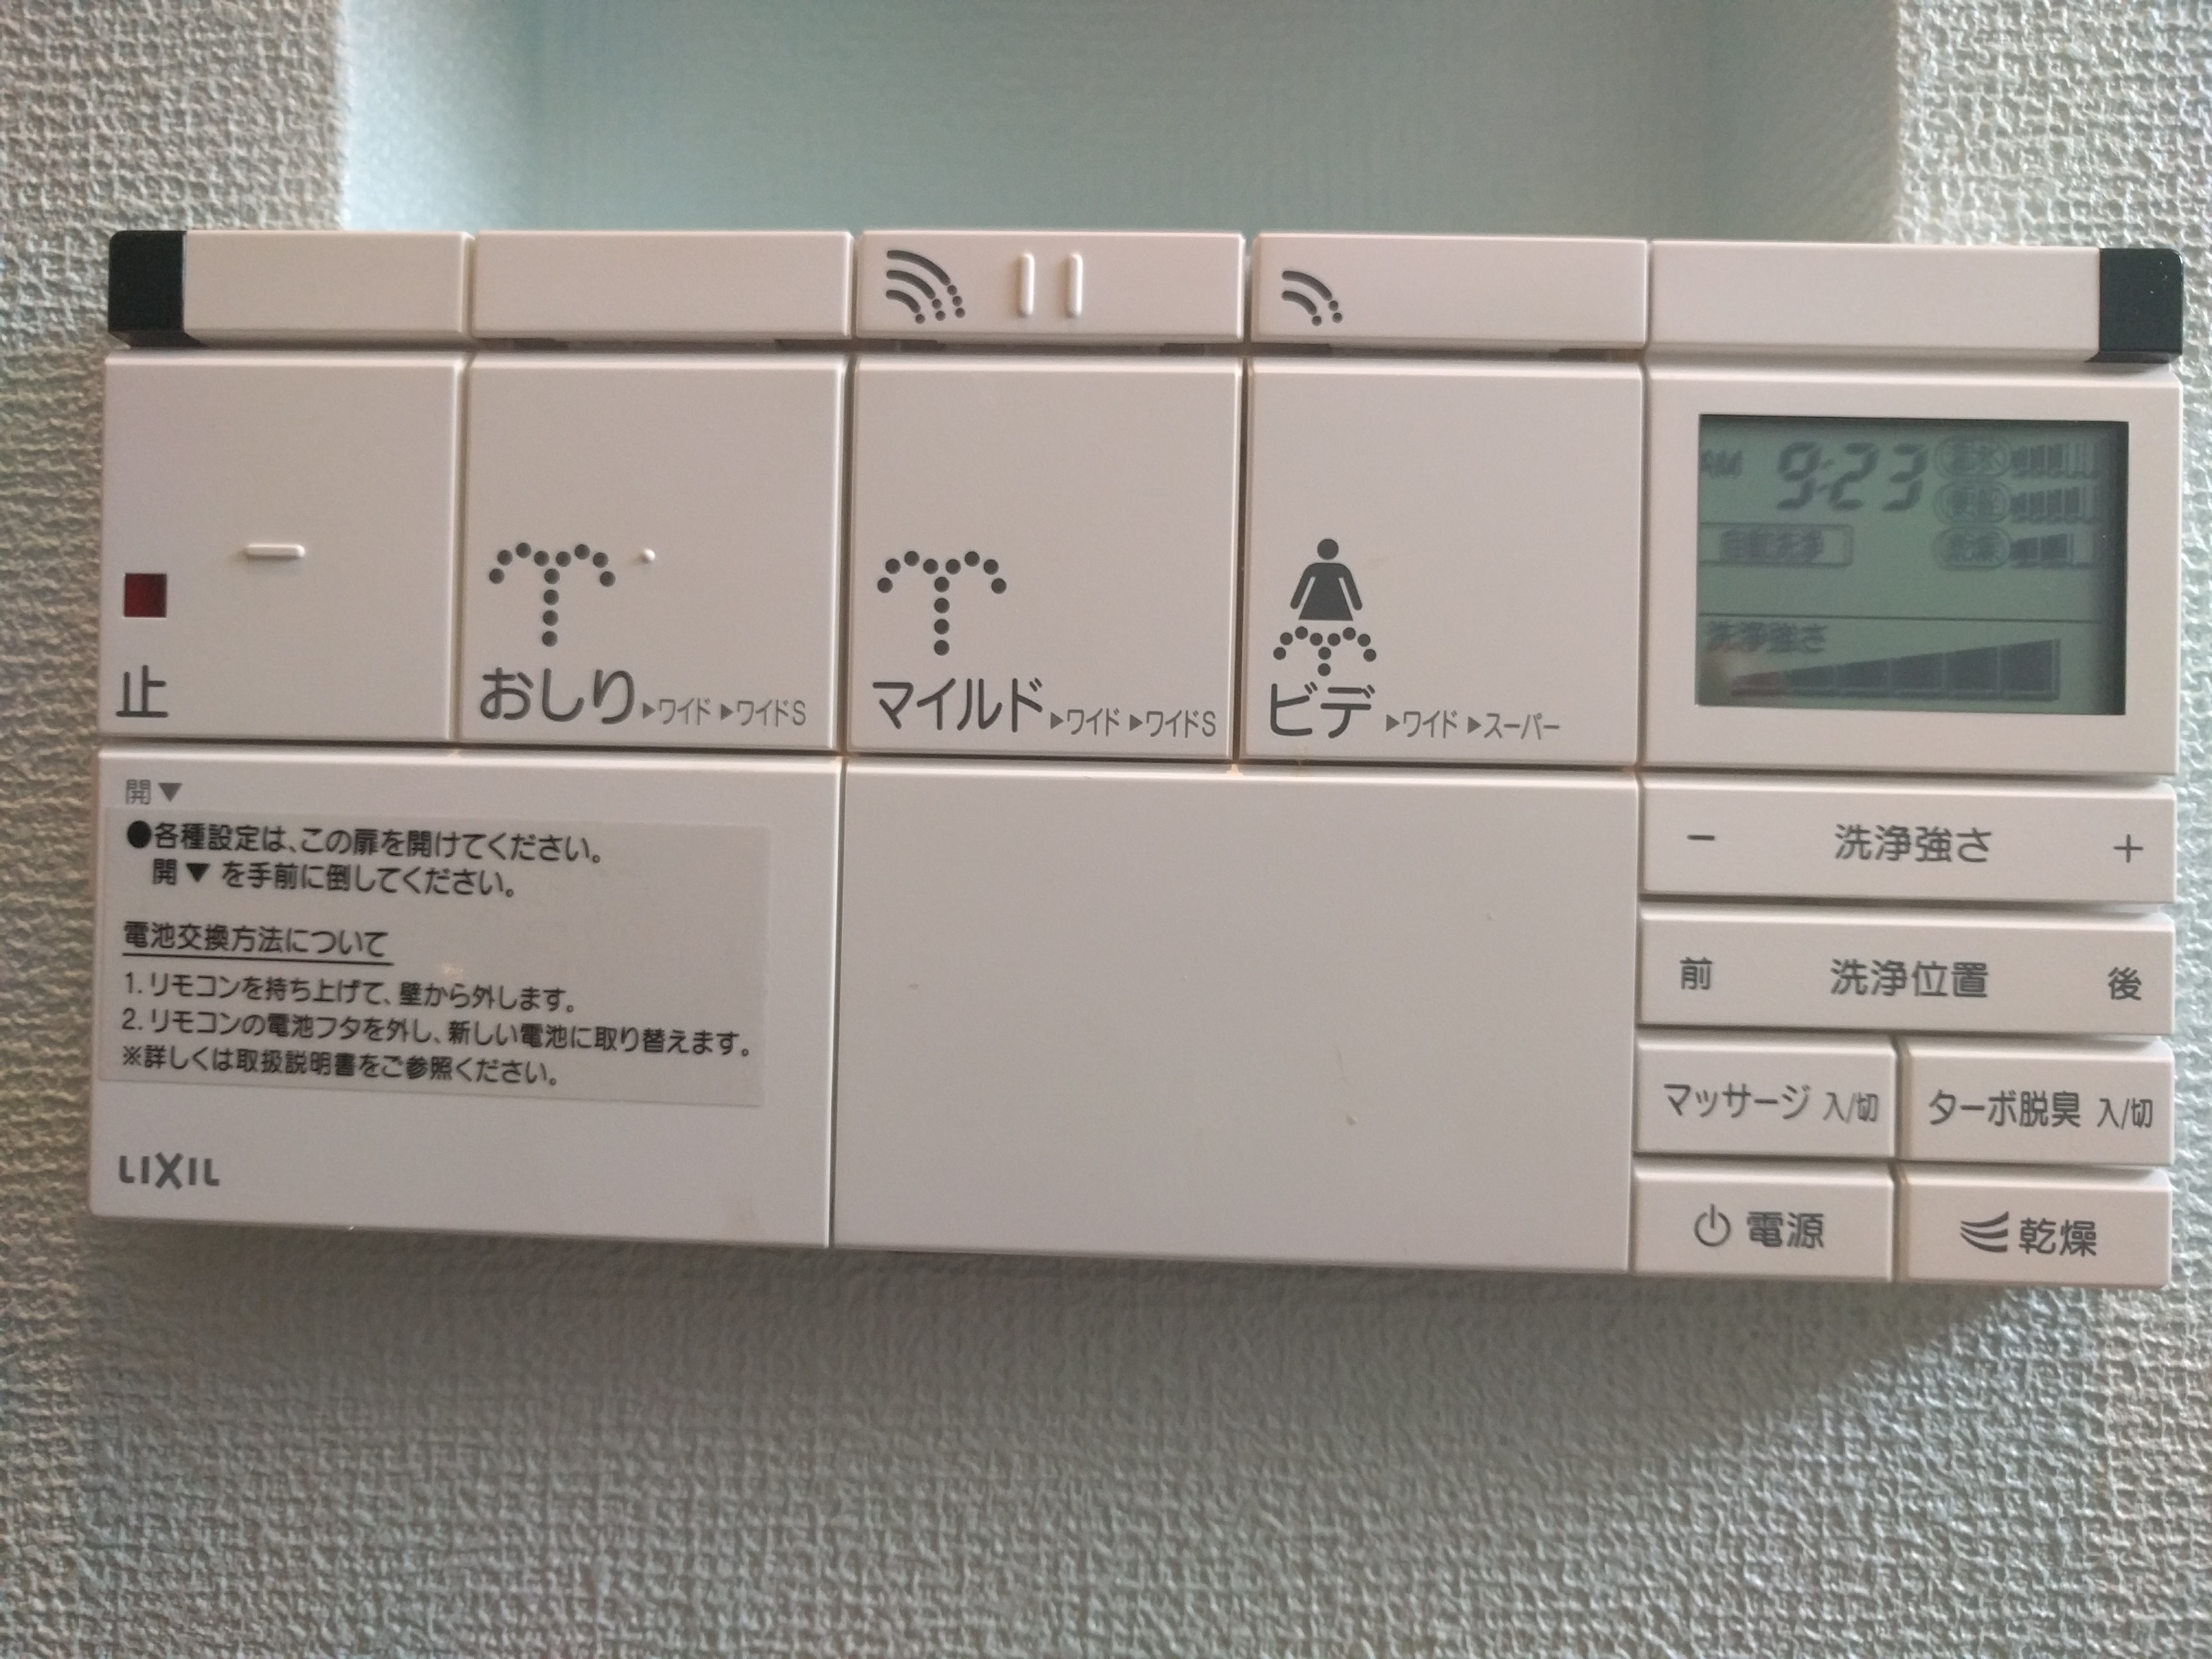 Japanese Toilet Controls